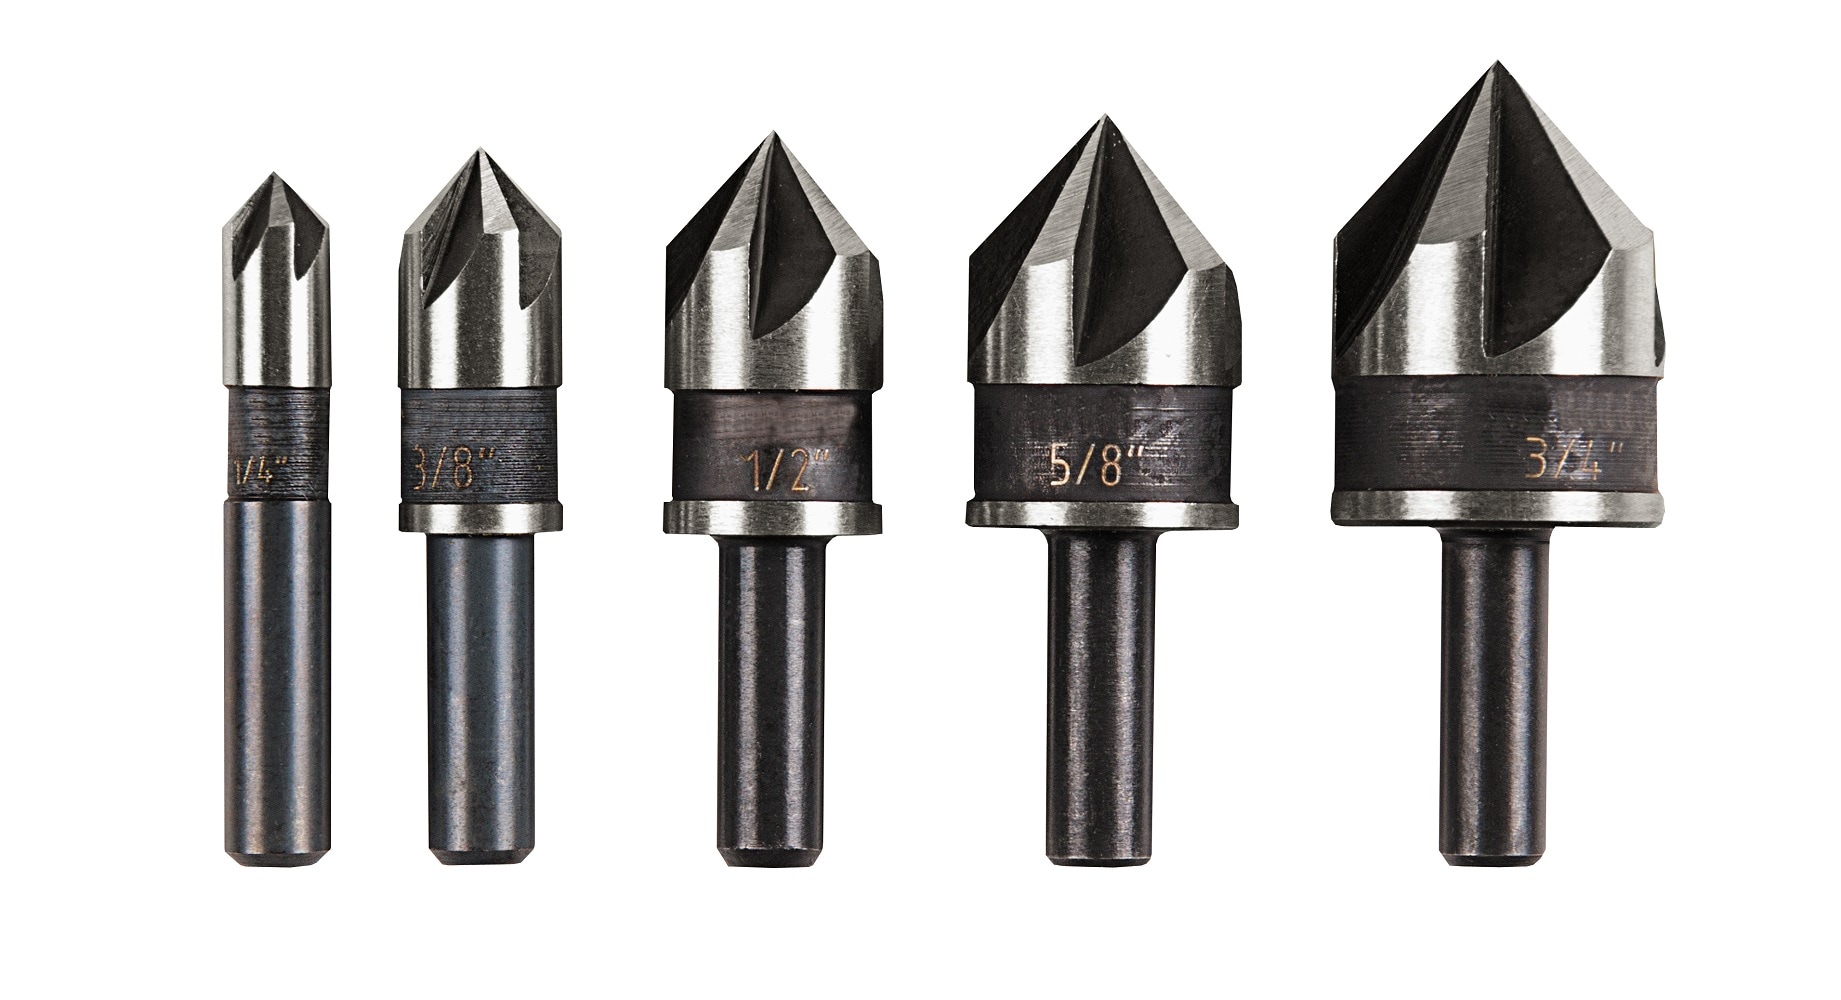 Black & Decker 15575 29 Piece Twist Drill Bit Assortment with Metal Index